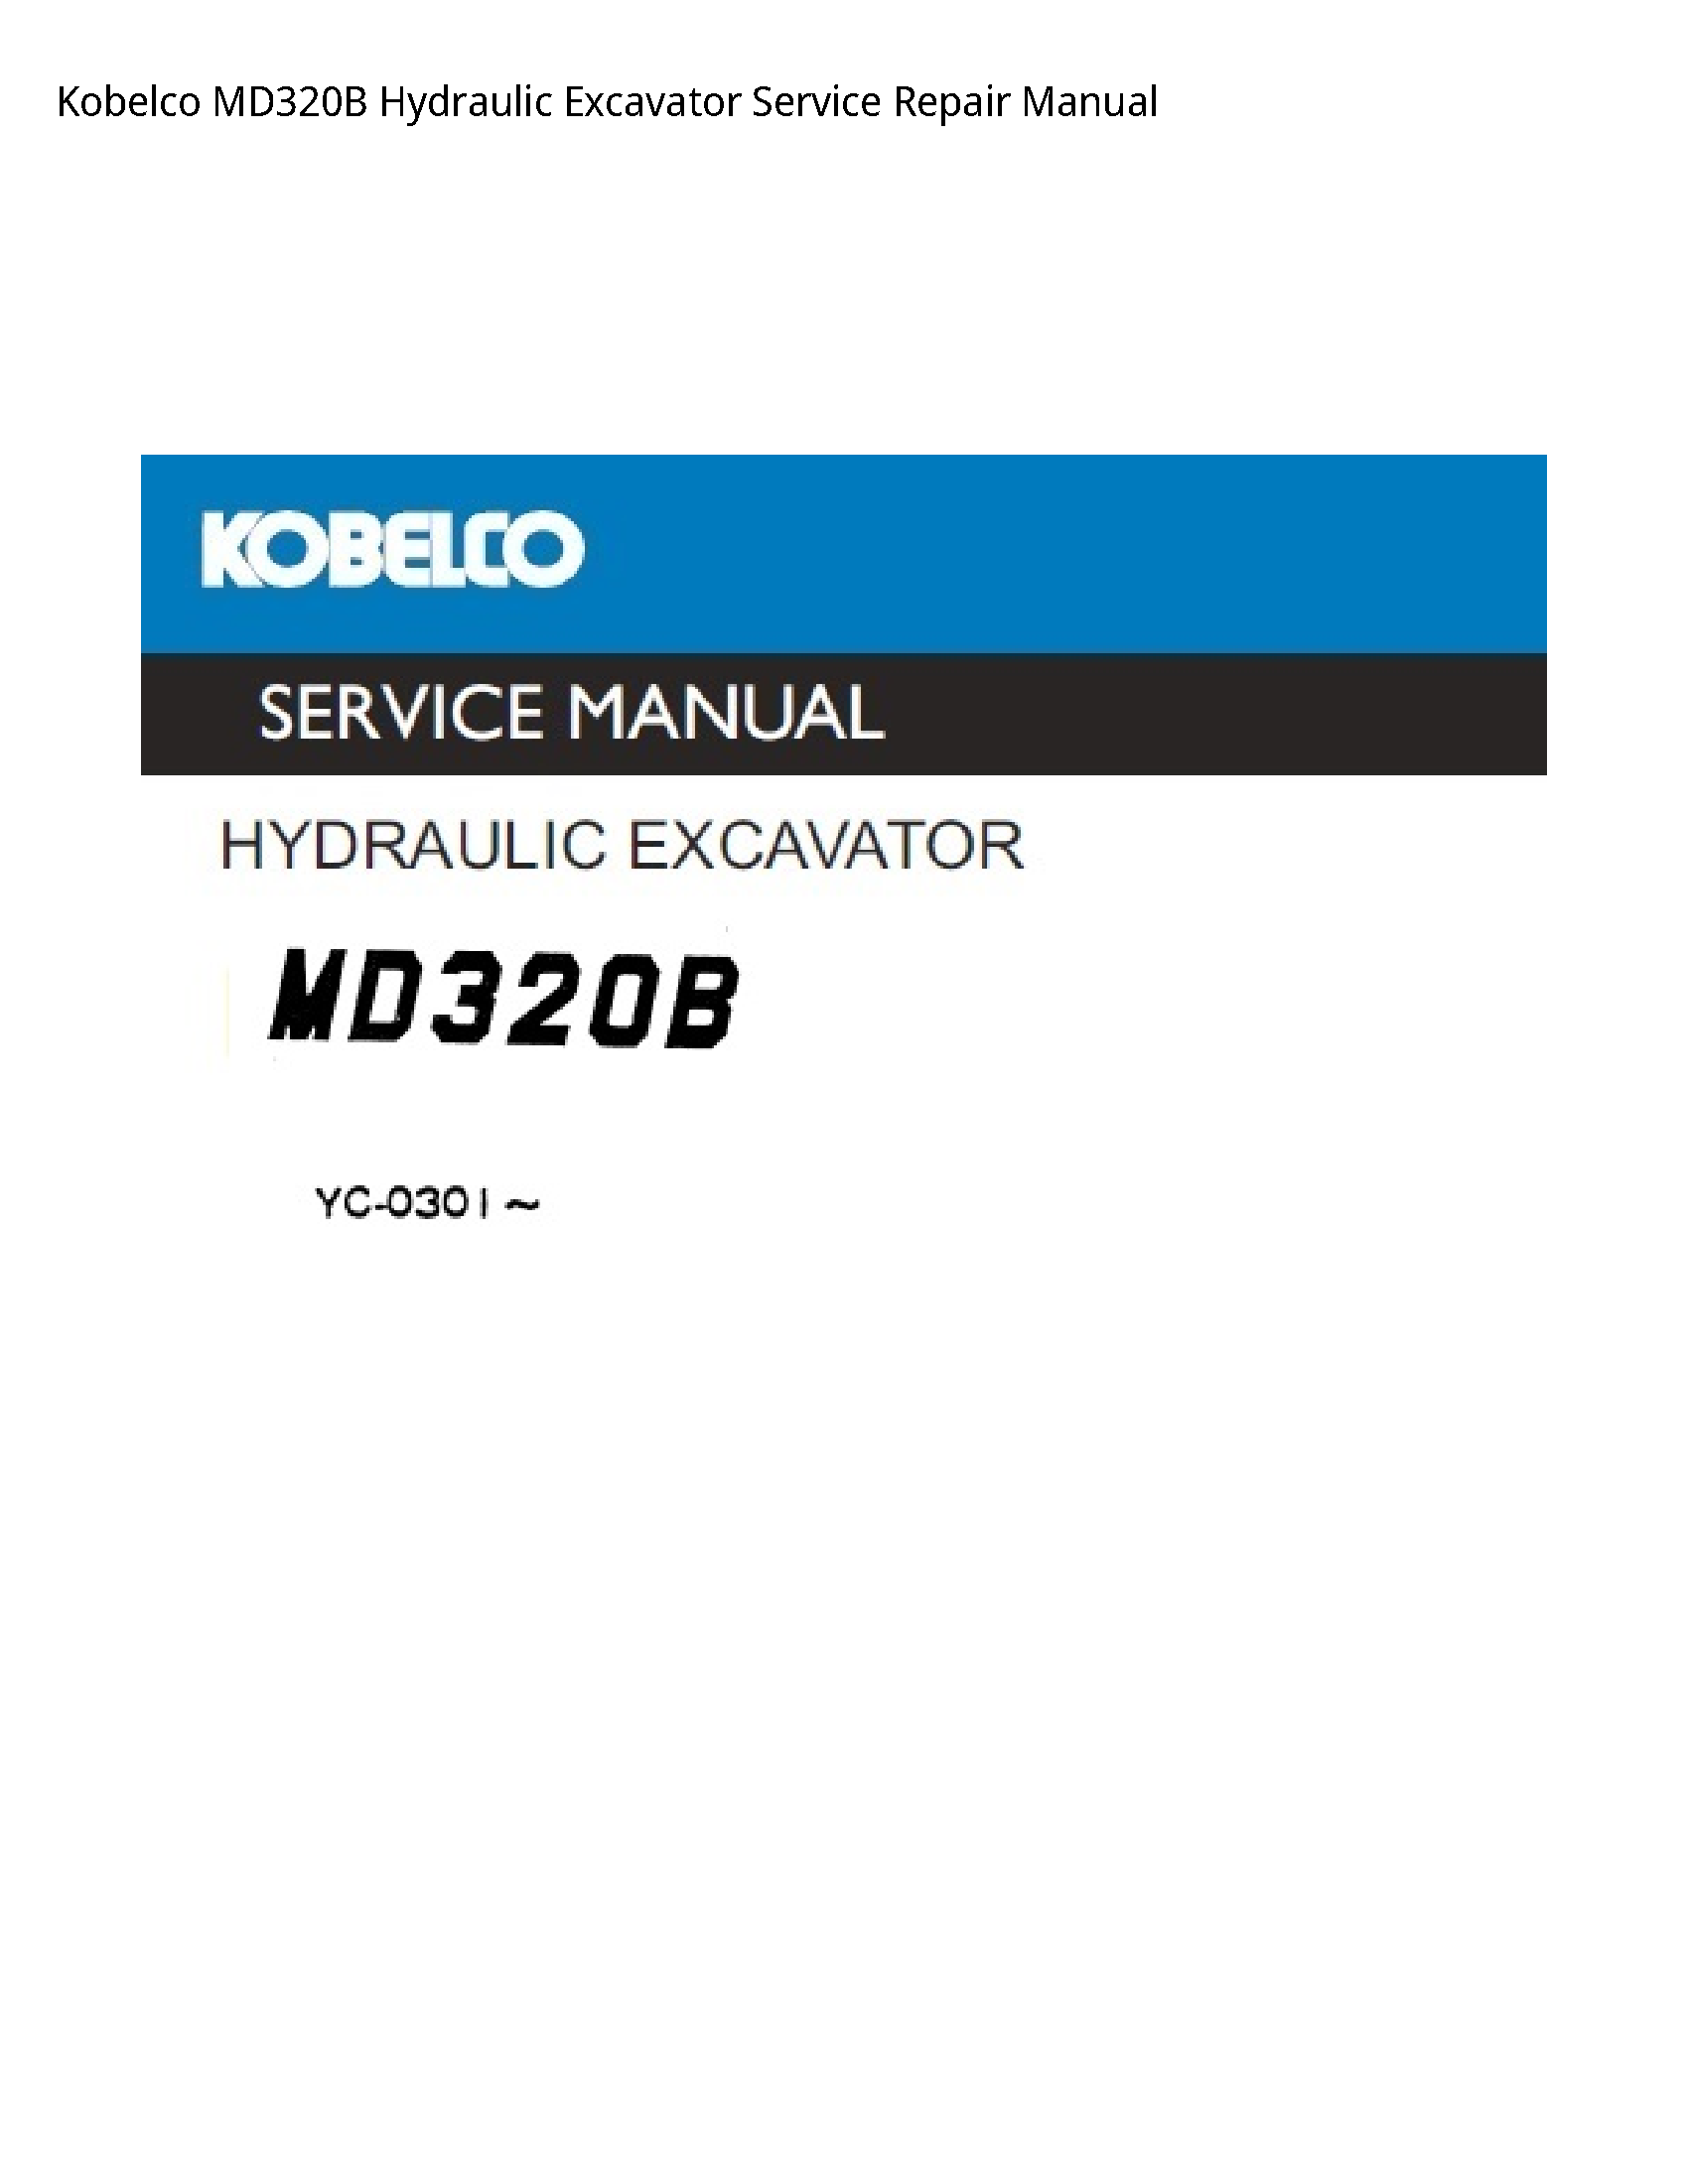 Kobelco MD320B Hydraulic Excavator manual